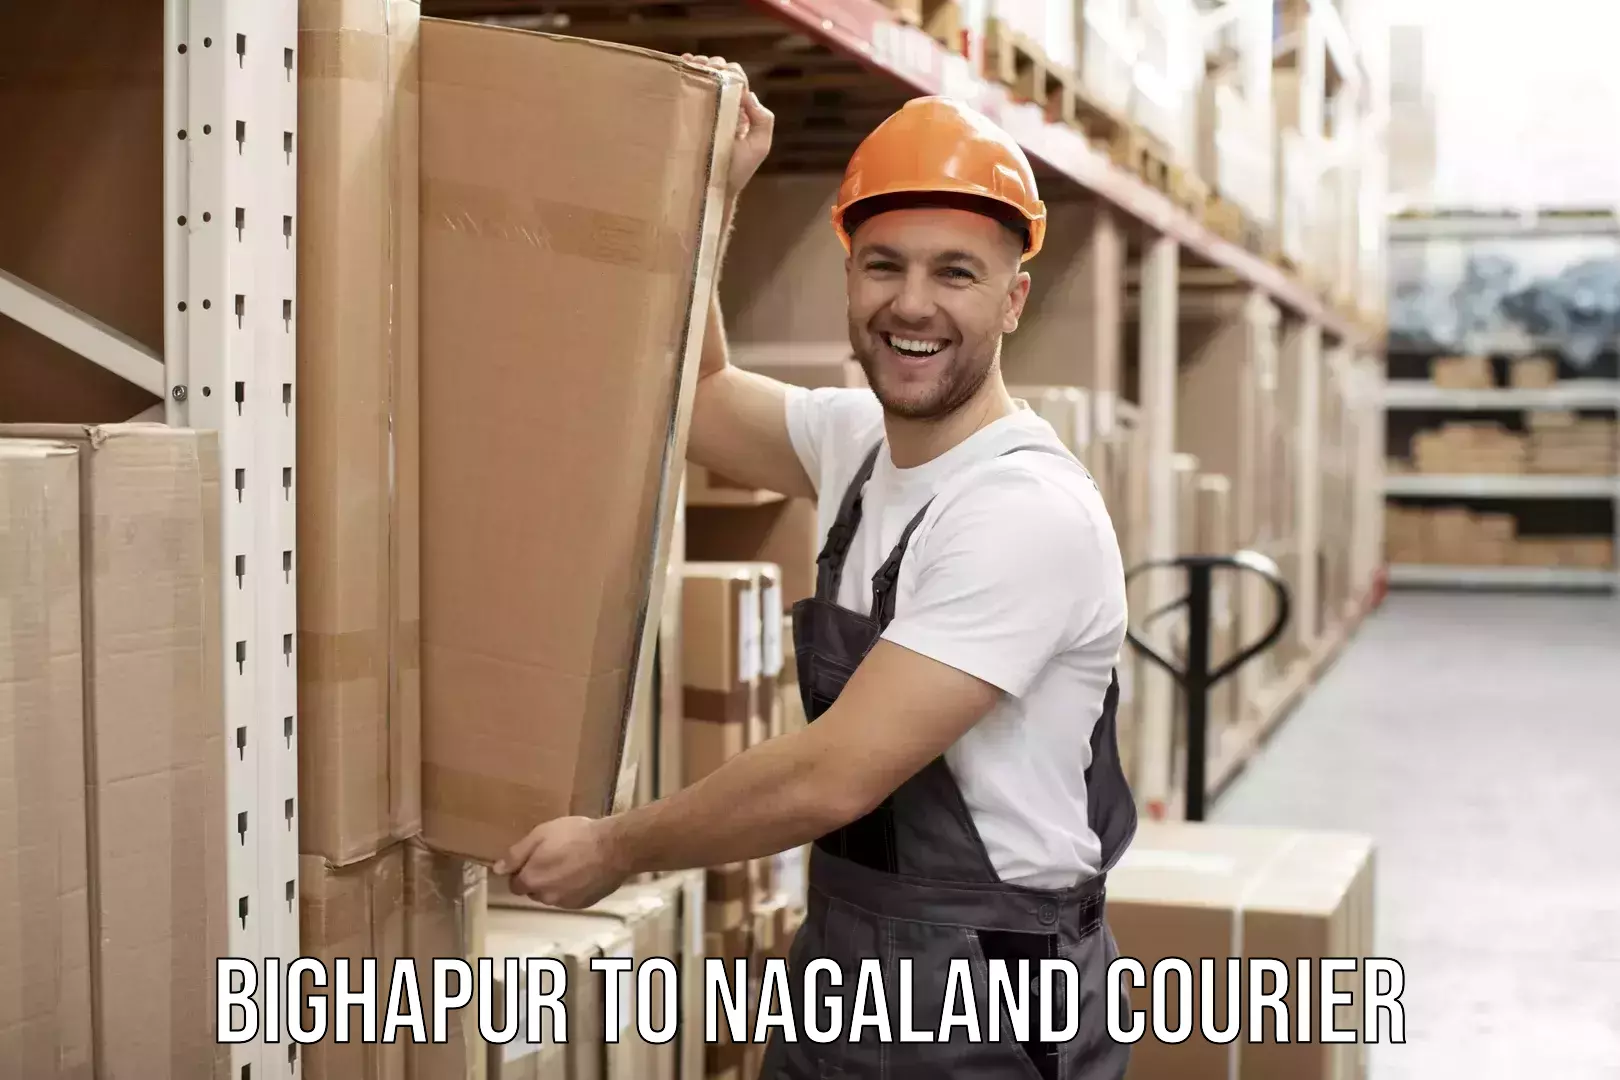 Furniture transport service Bighapur to Nagaland